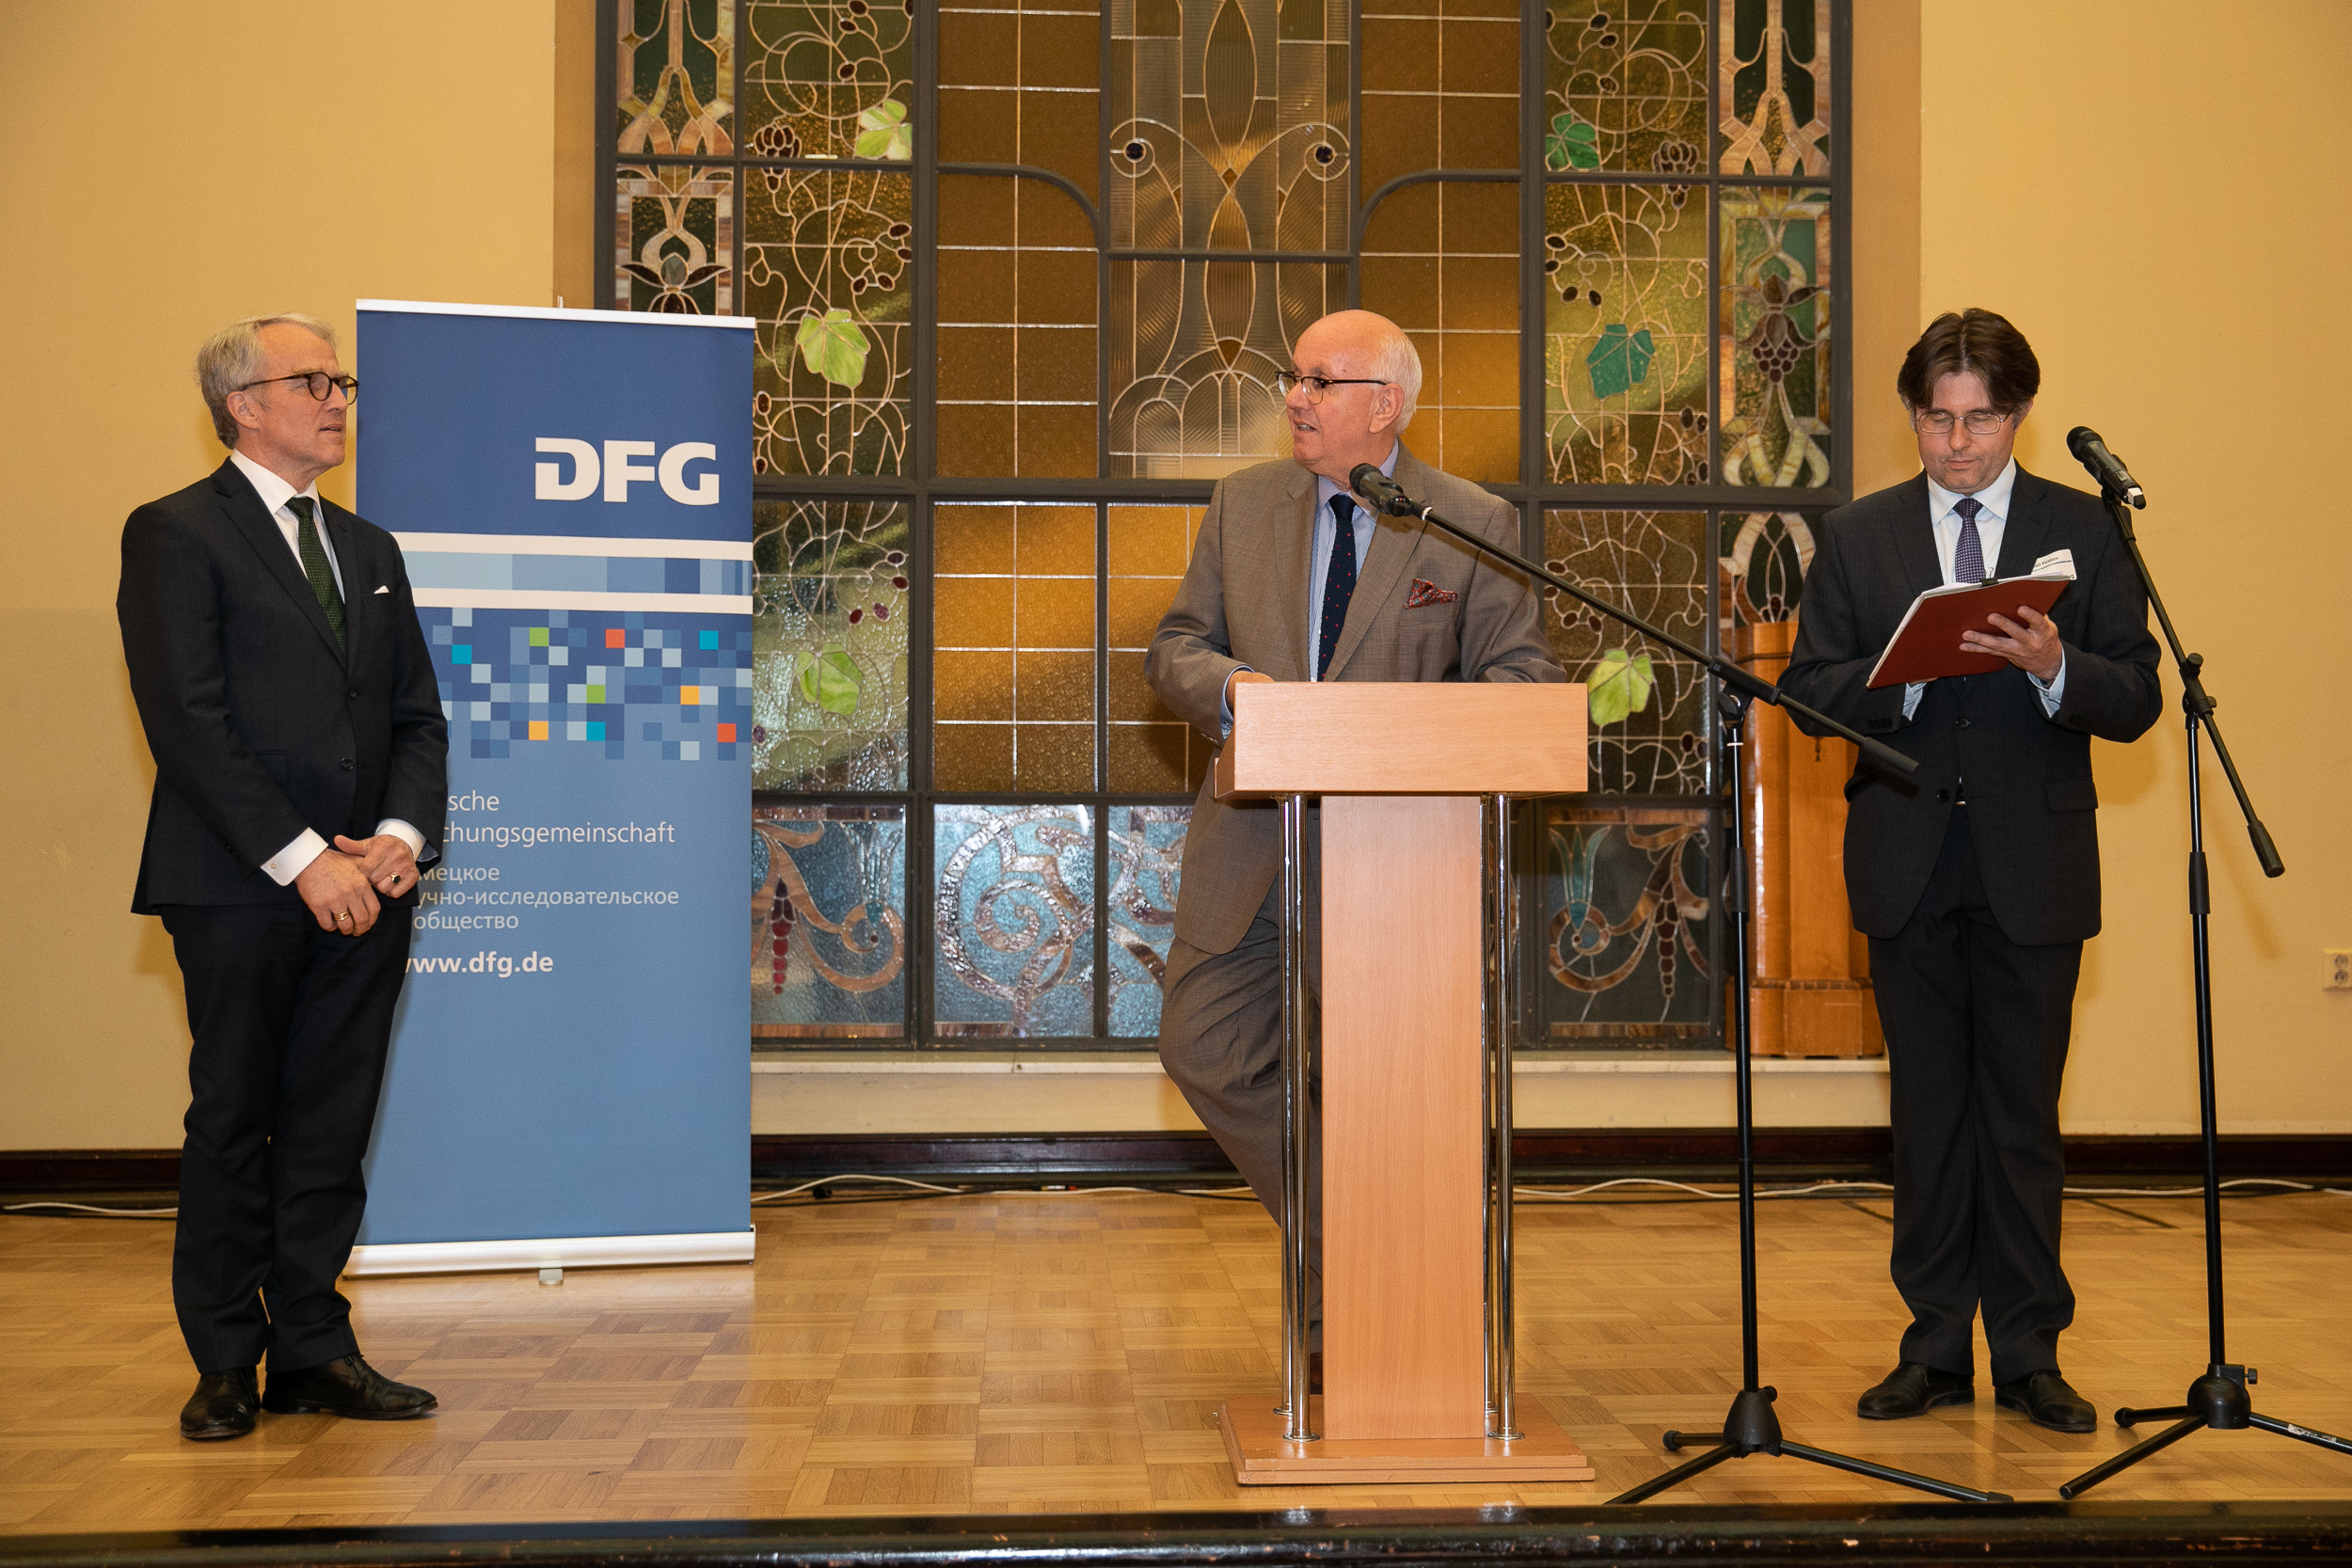 DFG President Peter Strohschneider opened the ceremonious reception